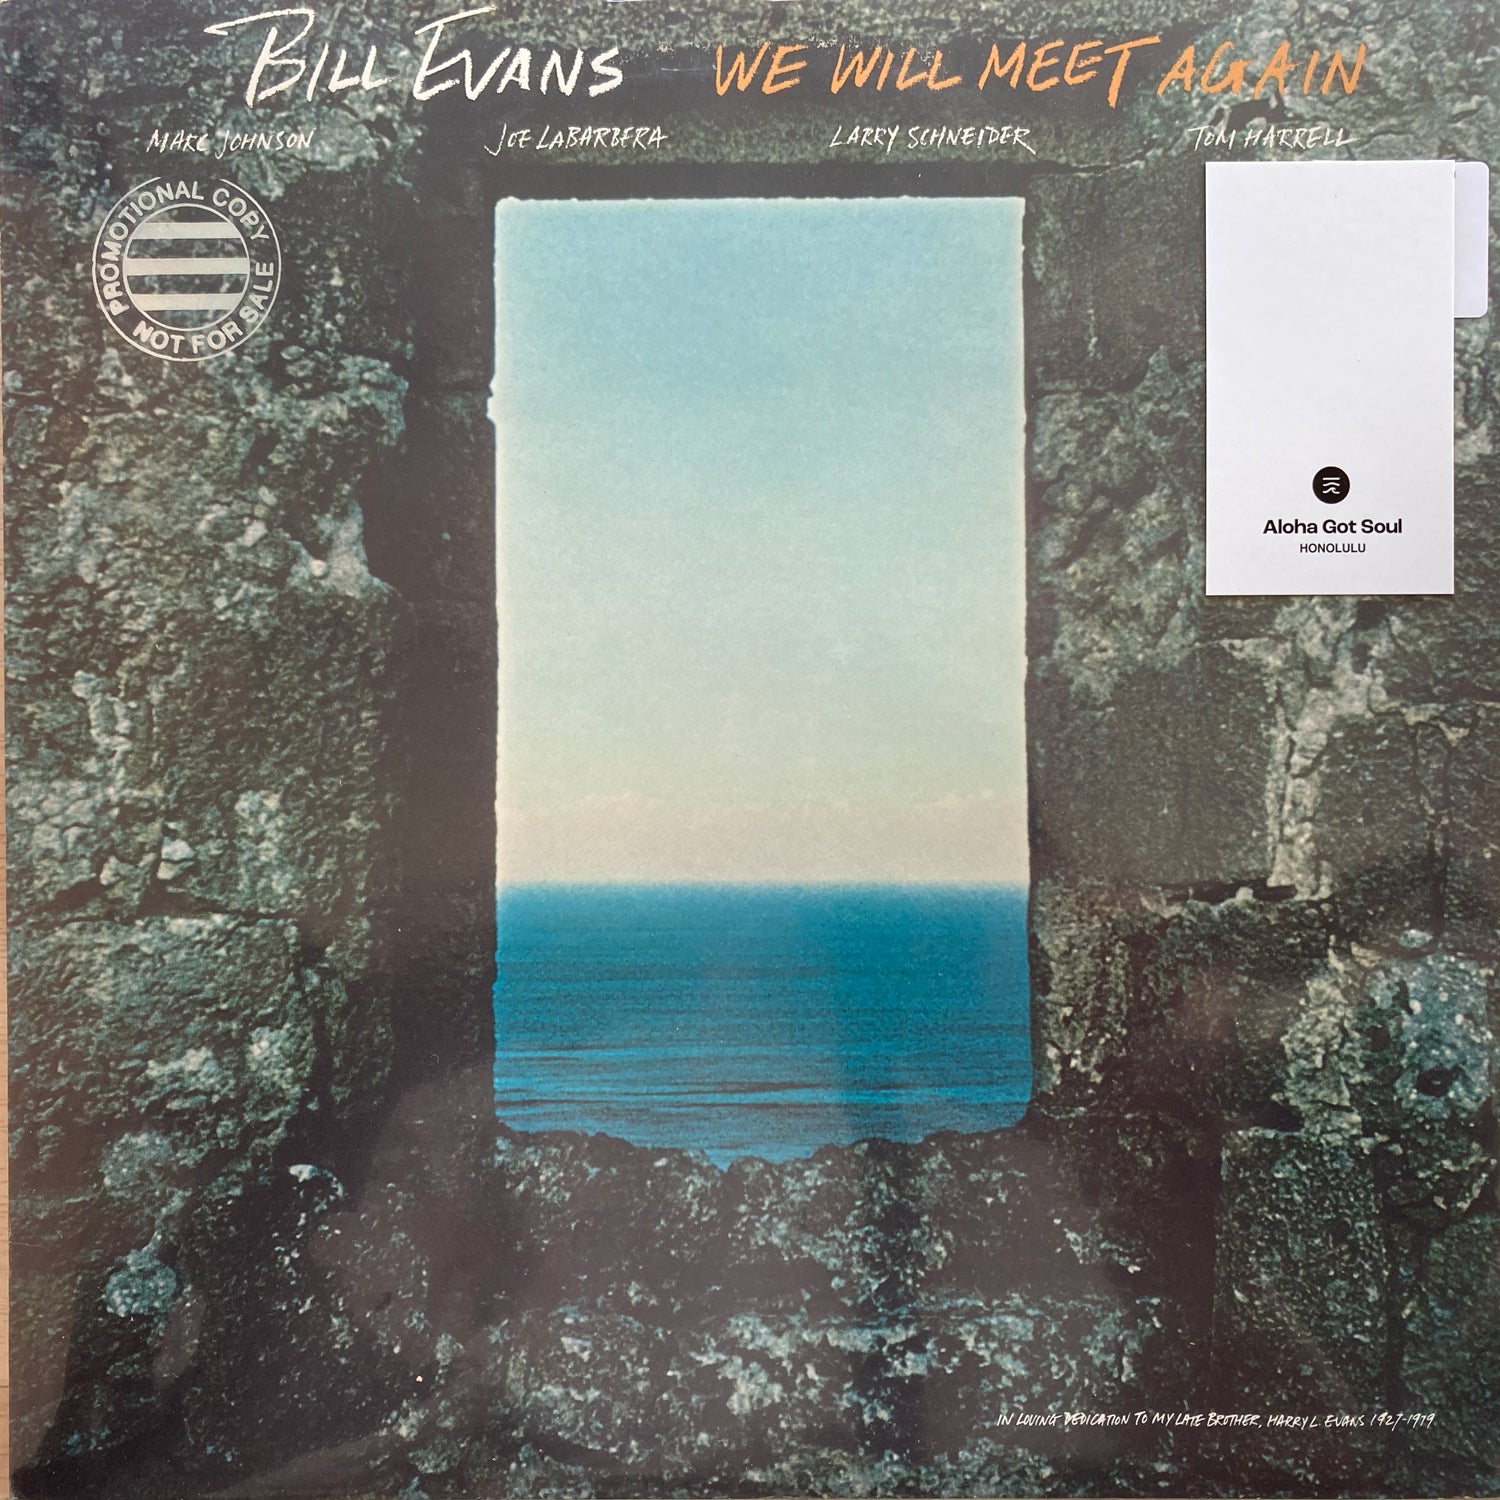 Bill Evans - We Will Meet Again